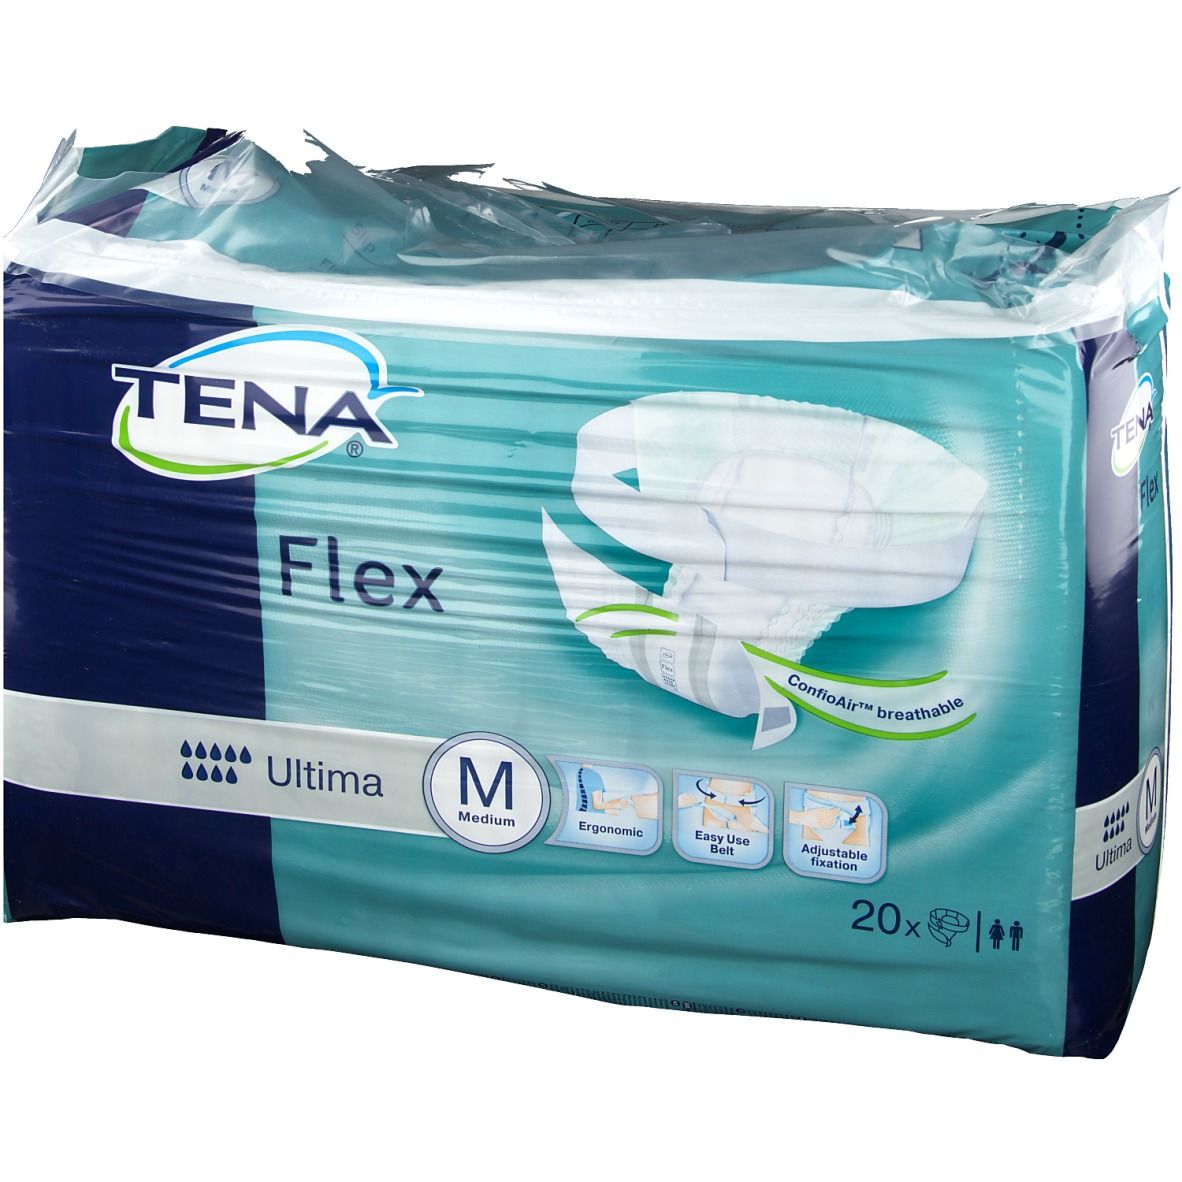 TENA® Flex Ultima M